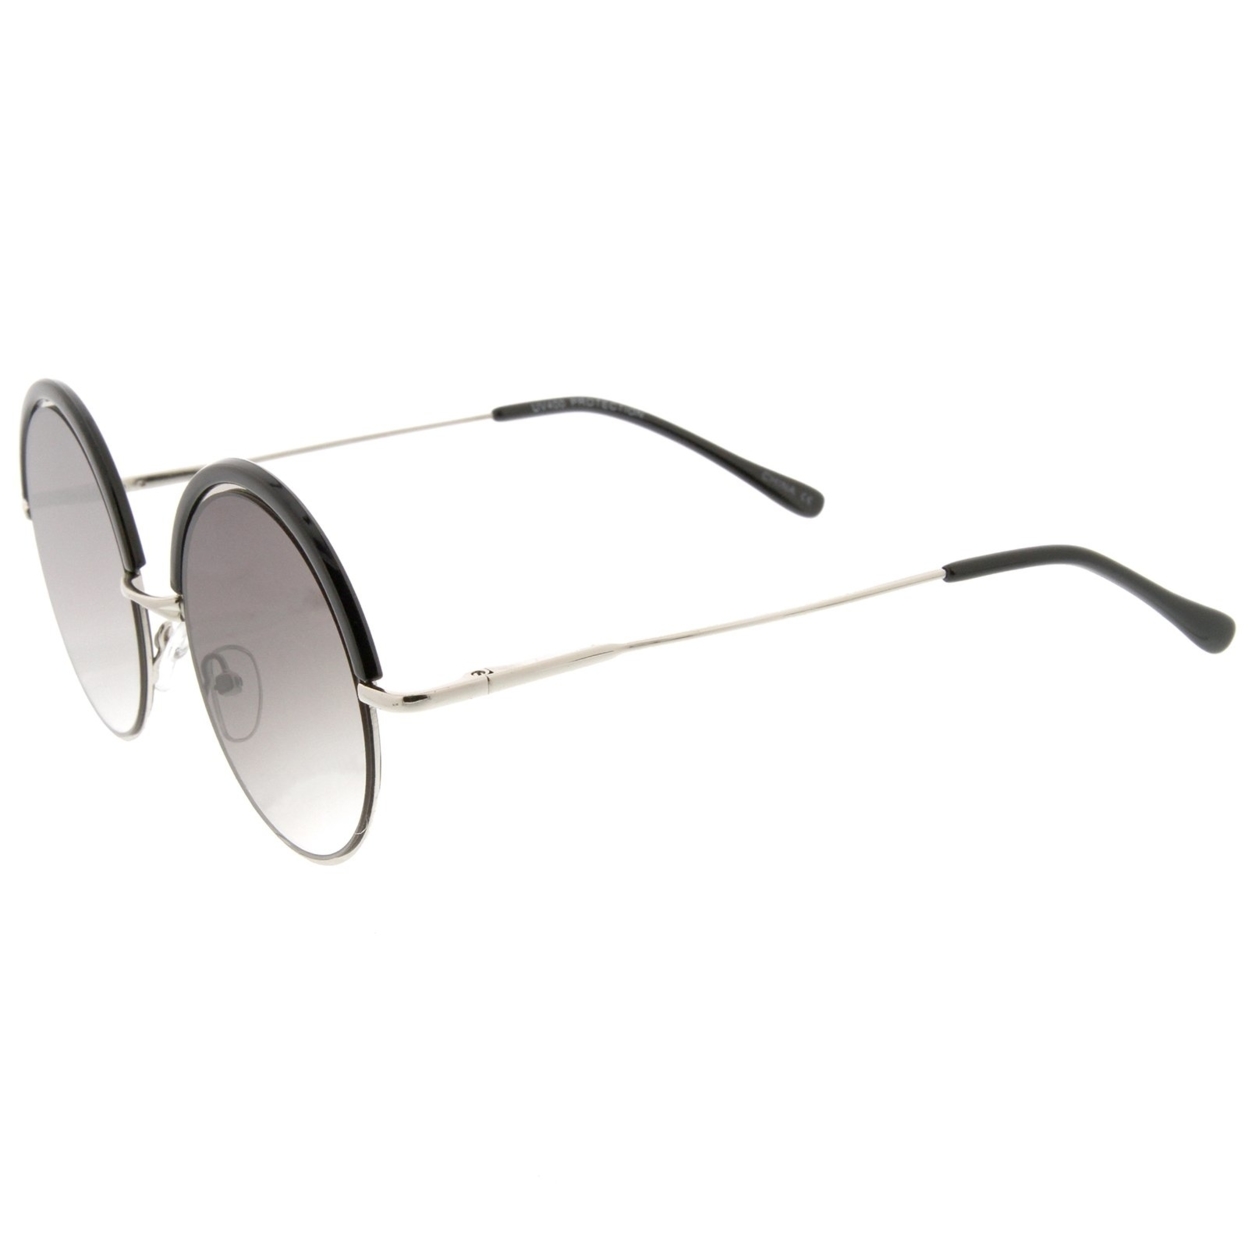 Retro Metal Frame Thin Temple Top Trim Flat Lens Round Sunglasses 51mm - Tortoise-Gold / Brown